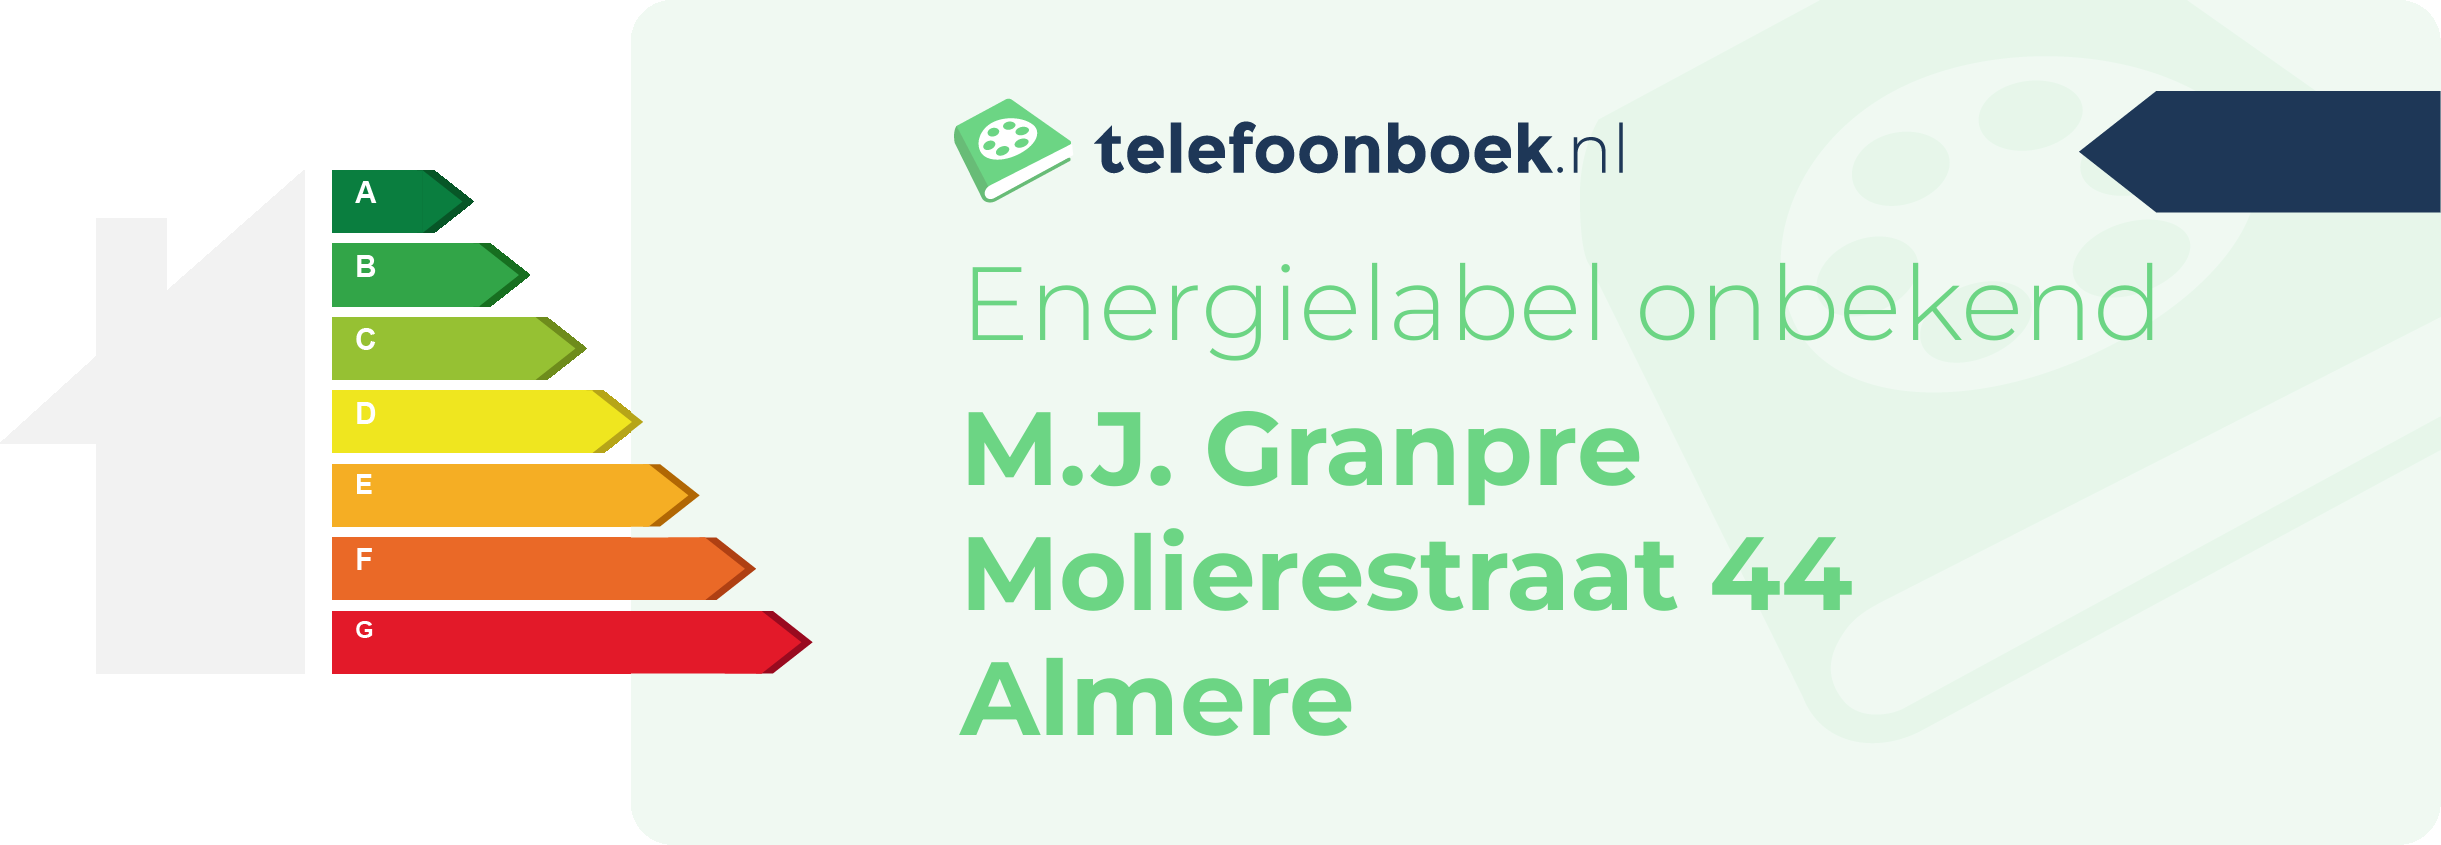 Energielabel M.J. Granpre Molierestraat 44 Almere